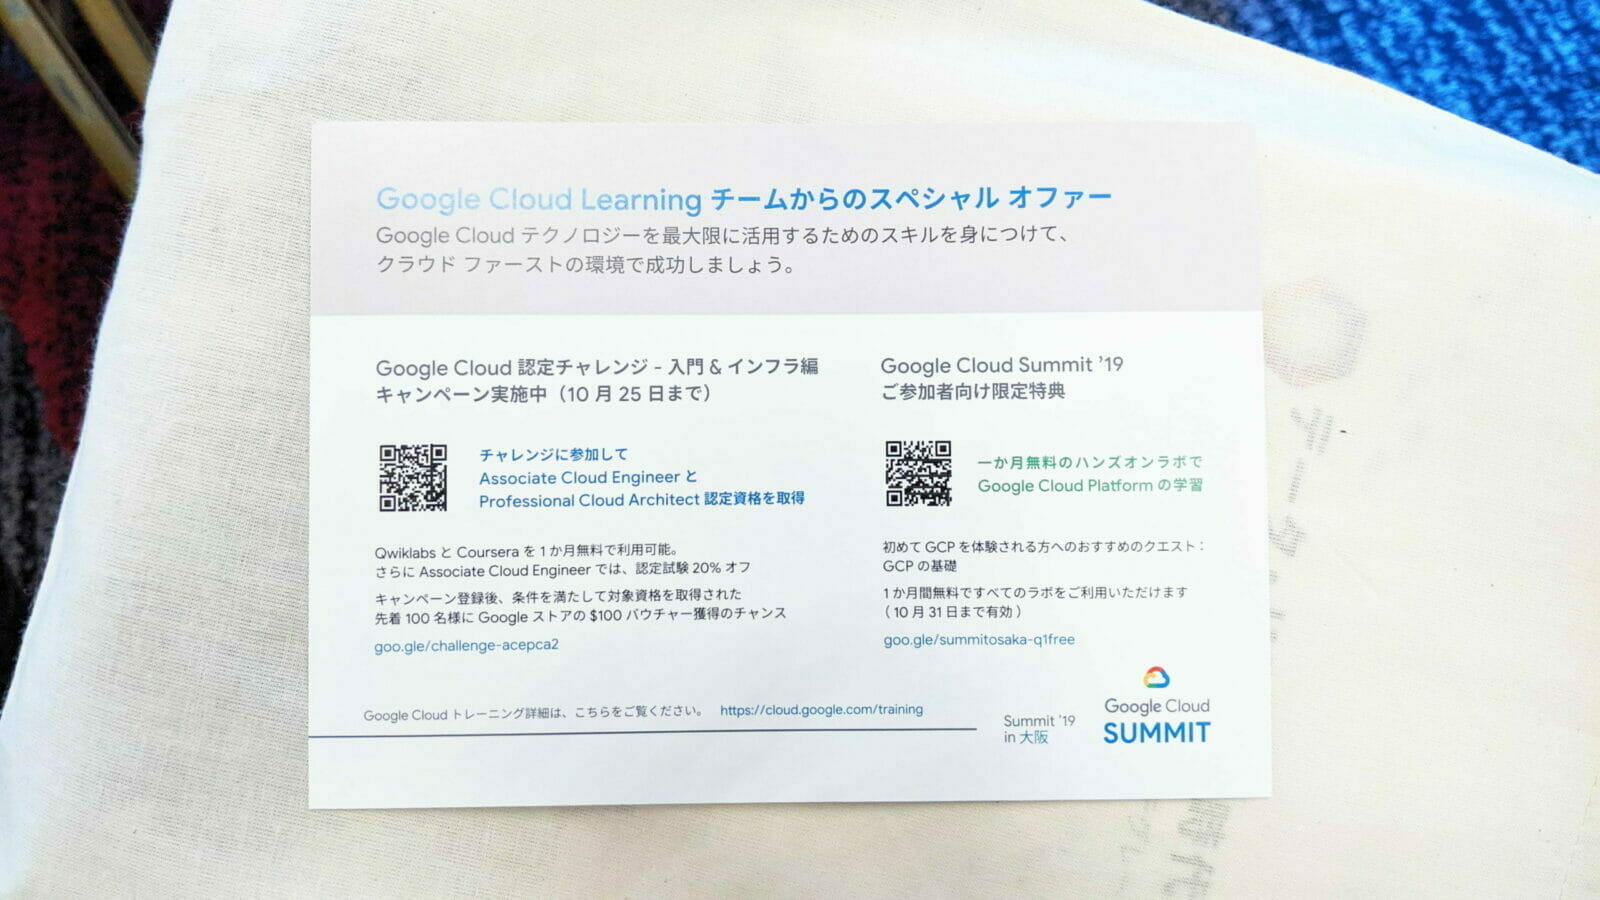 Google Cloud Summit ’19 in 大阪 参加者で貰えるスペシャル オファー